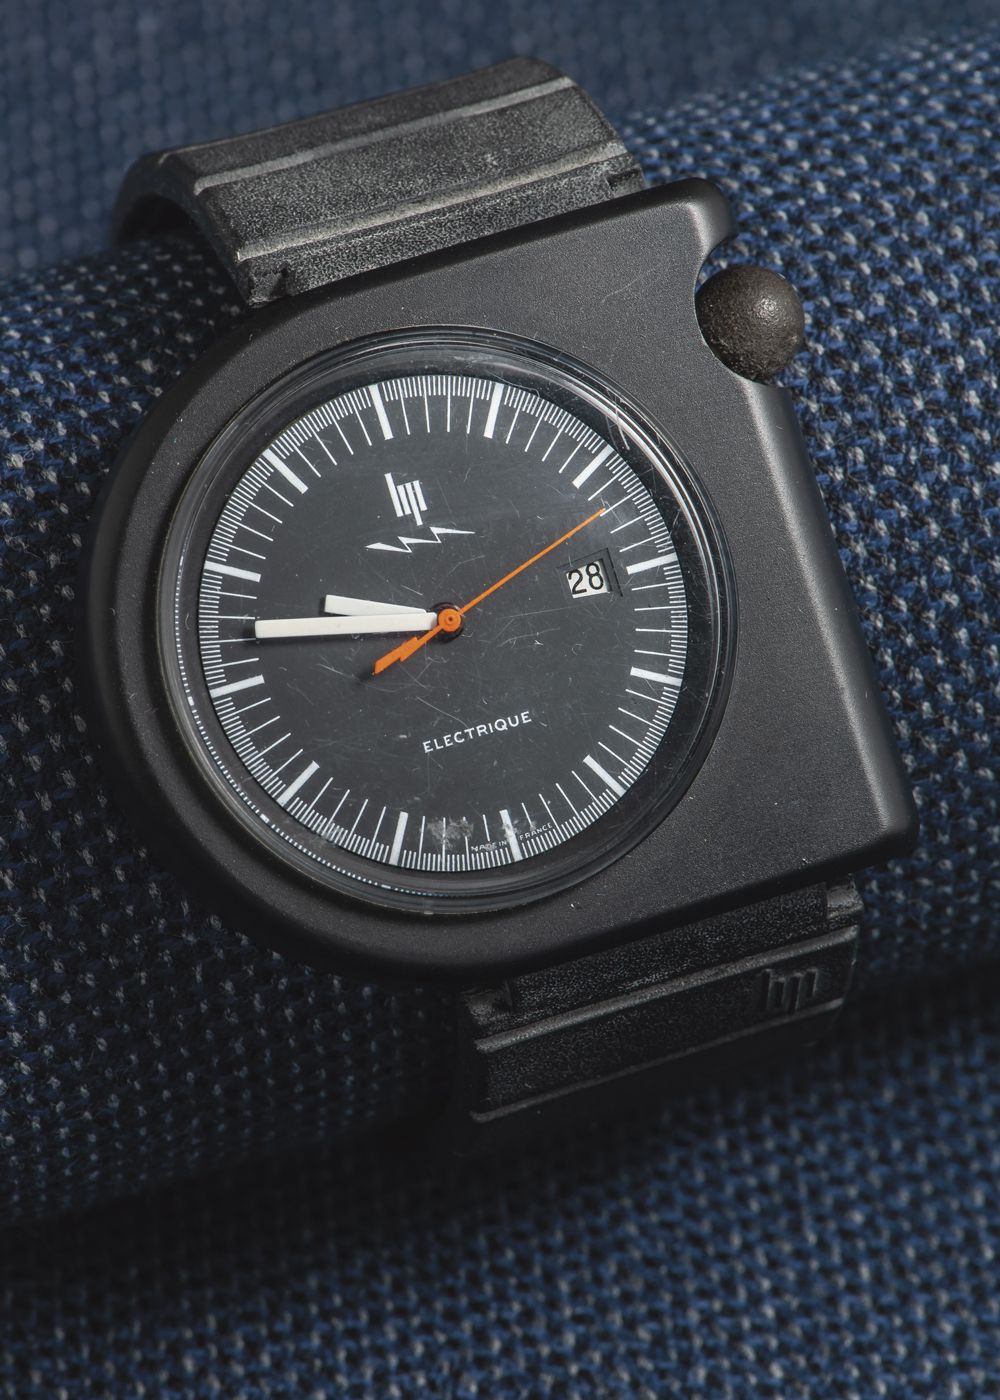 LIP – ROGER TALLON, vers 1975 Reloj modelo Mach 2000 ref. 43770, la caja asimétr&hellip;